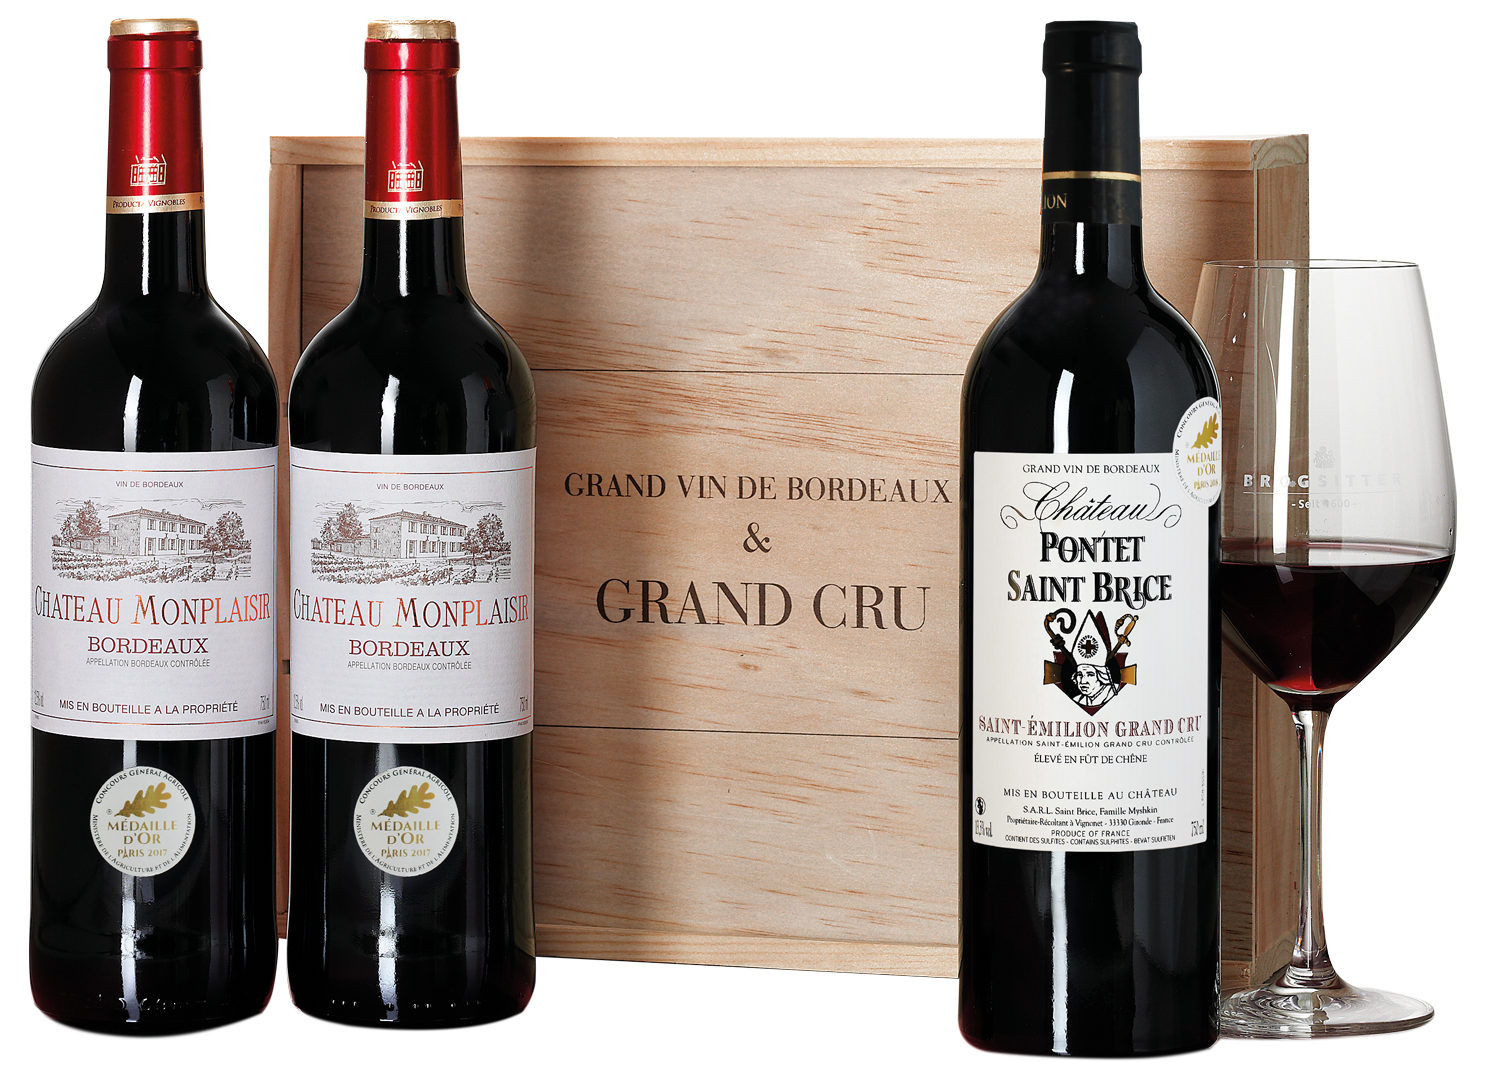 La vin. Grand Cru Bordeaux. Haut Pontet St-Emilion Grand Cru. VIN de Bordeaux Bordeaux. Шато де Сеген бордо вино 2015 Гранд вин.